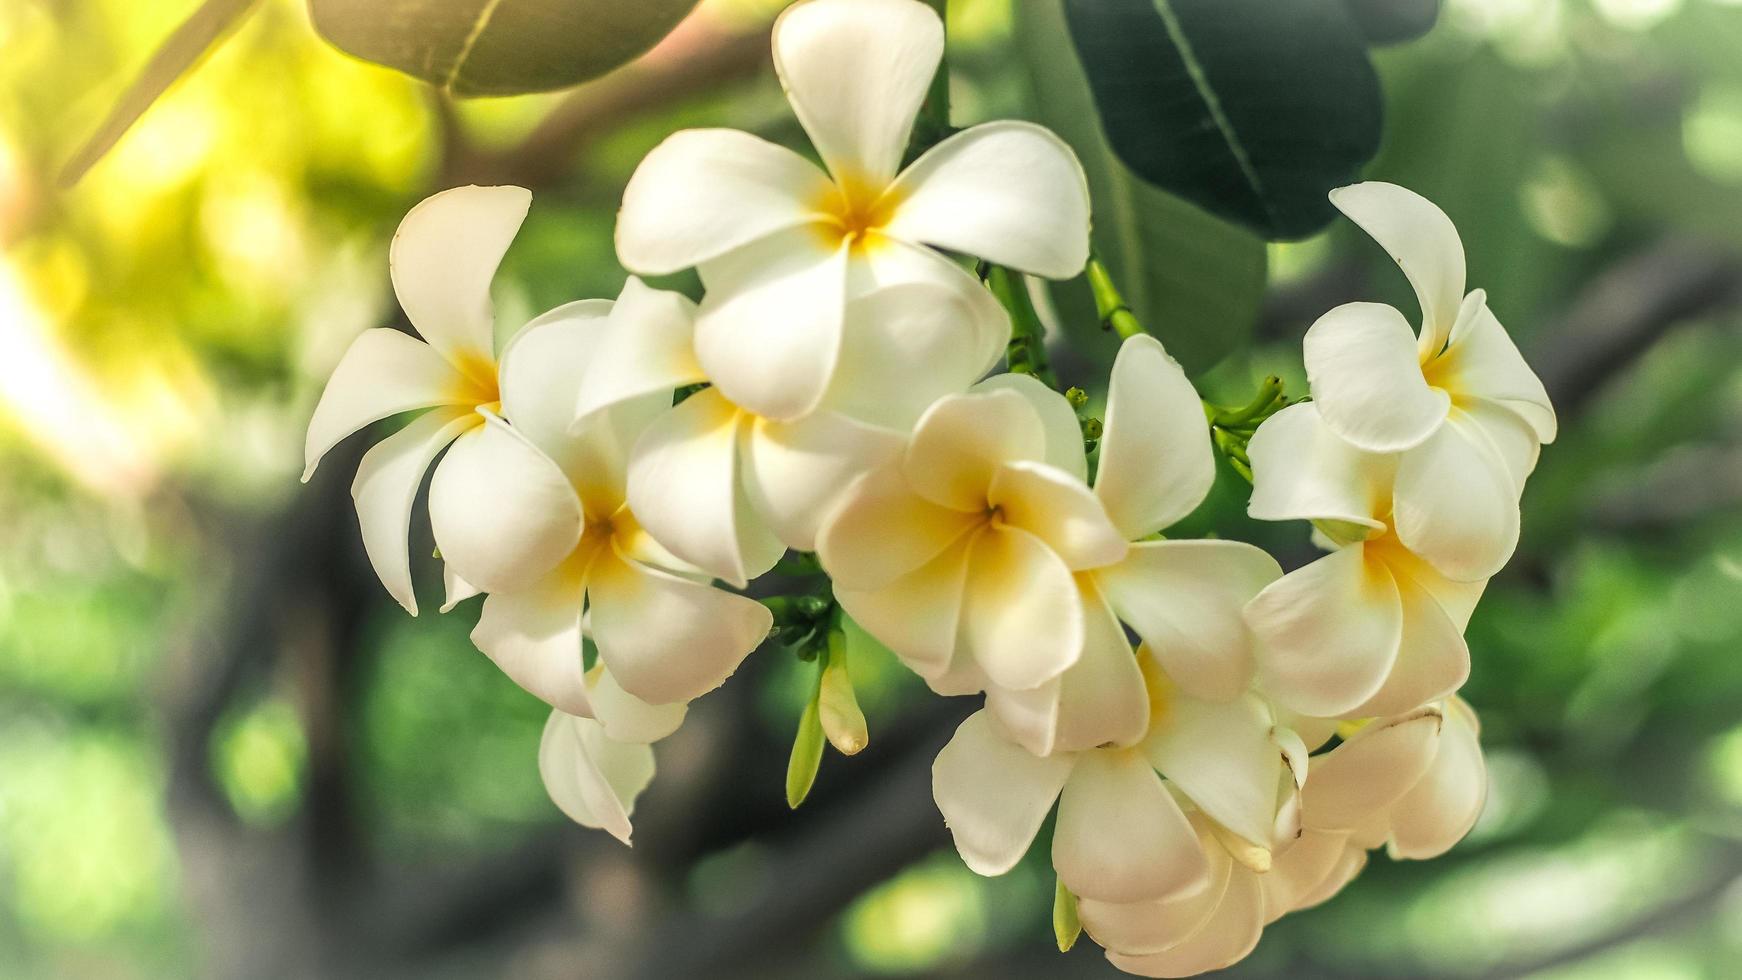 flores tropicales frangipani plumeria. hermosa flor blanca plumeria rubra  5148096 Foto de stock en Vecteezy